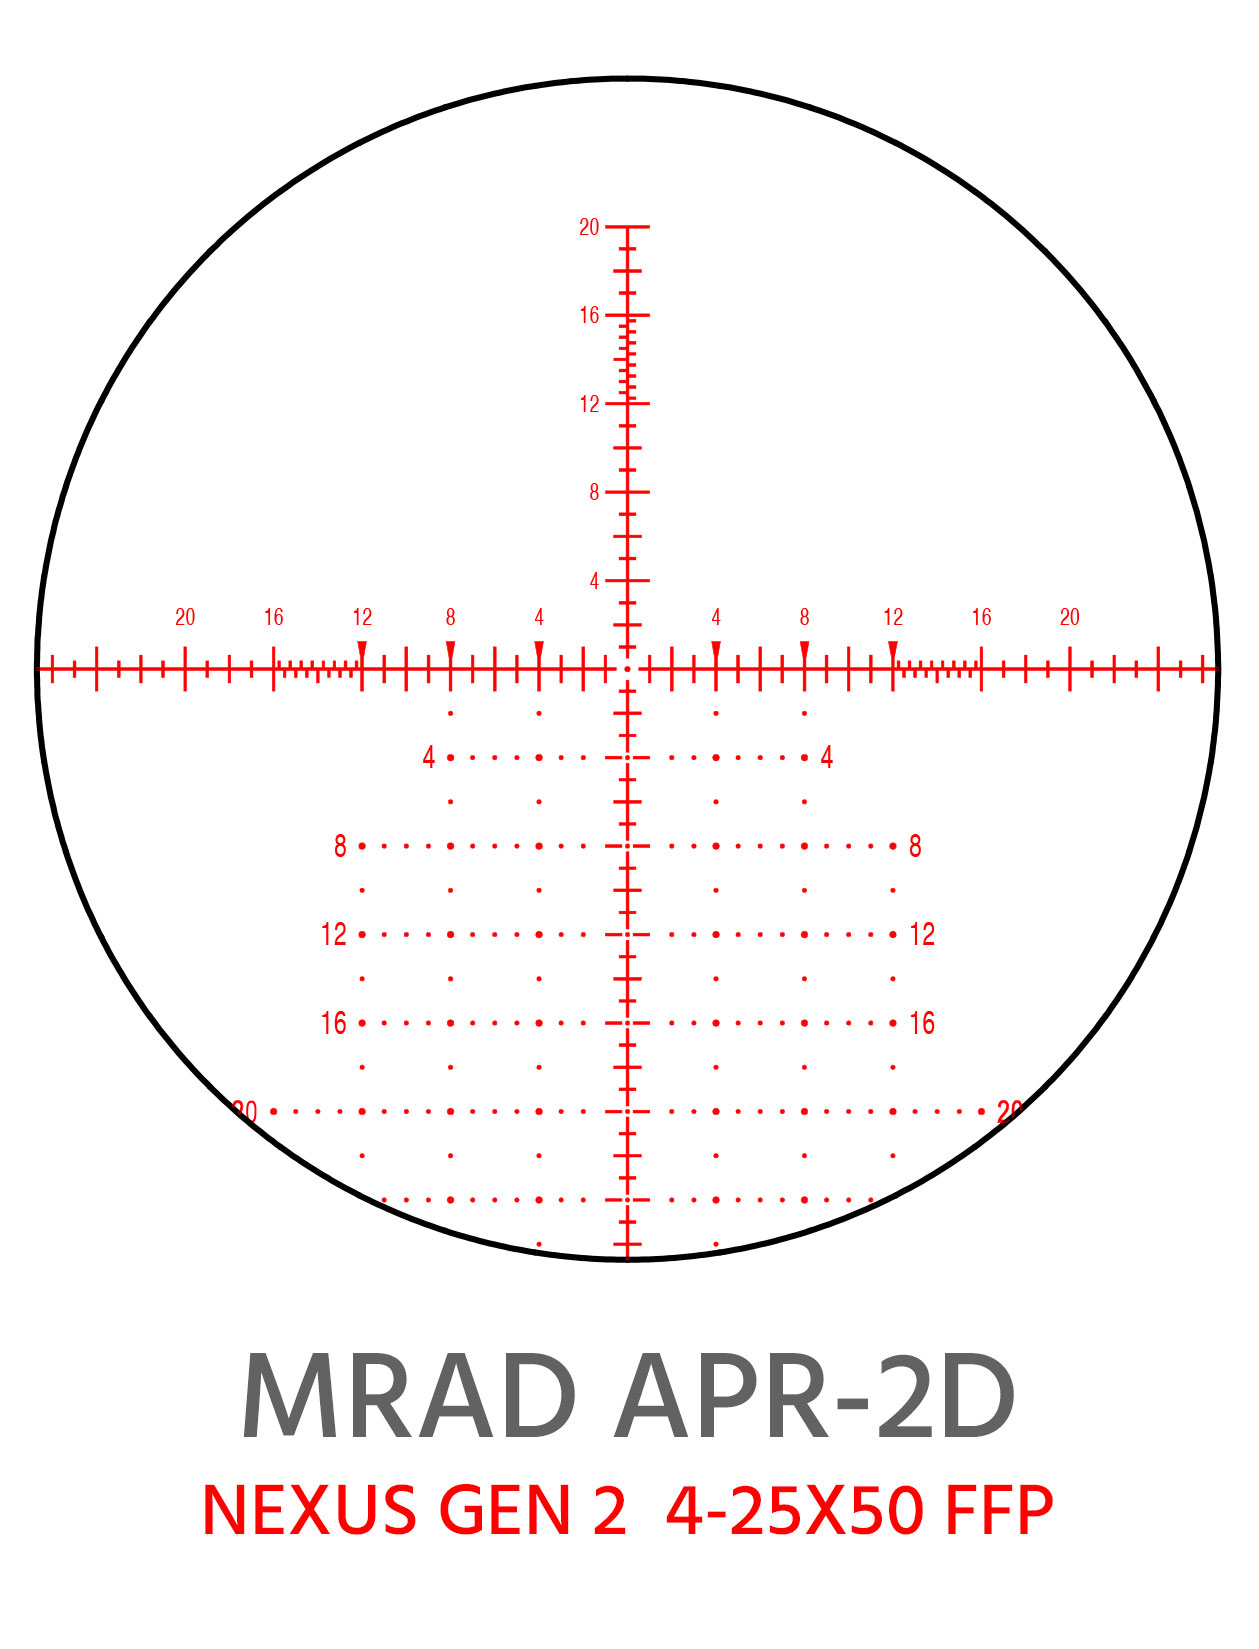 NEXUS GEN 2 MRAD APR-2D